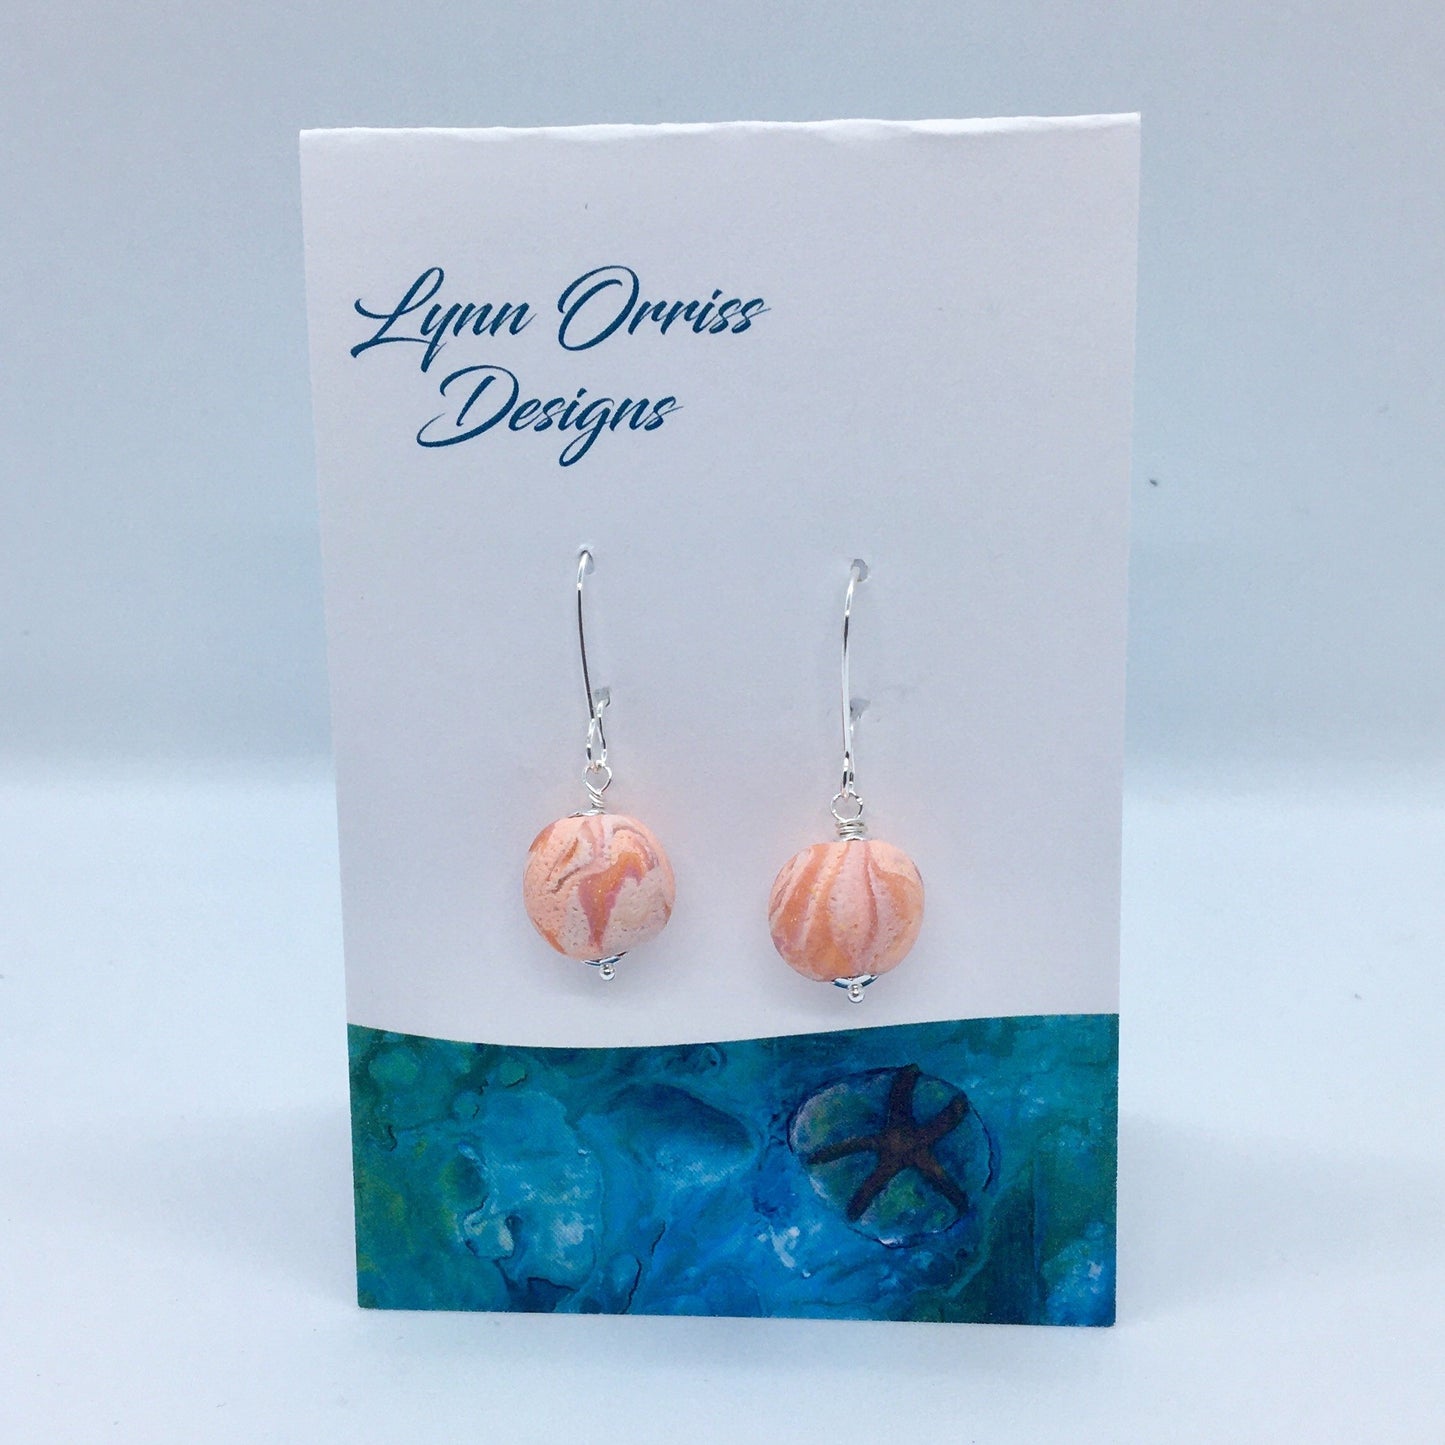 Lynn Orriss - Earrings - Small ball, pink swirls on silver hooks - Lynn Orriss - McMillan Arts Centre Gallery, Gift Shop and Box Office - Vancouver Island Art Gallery